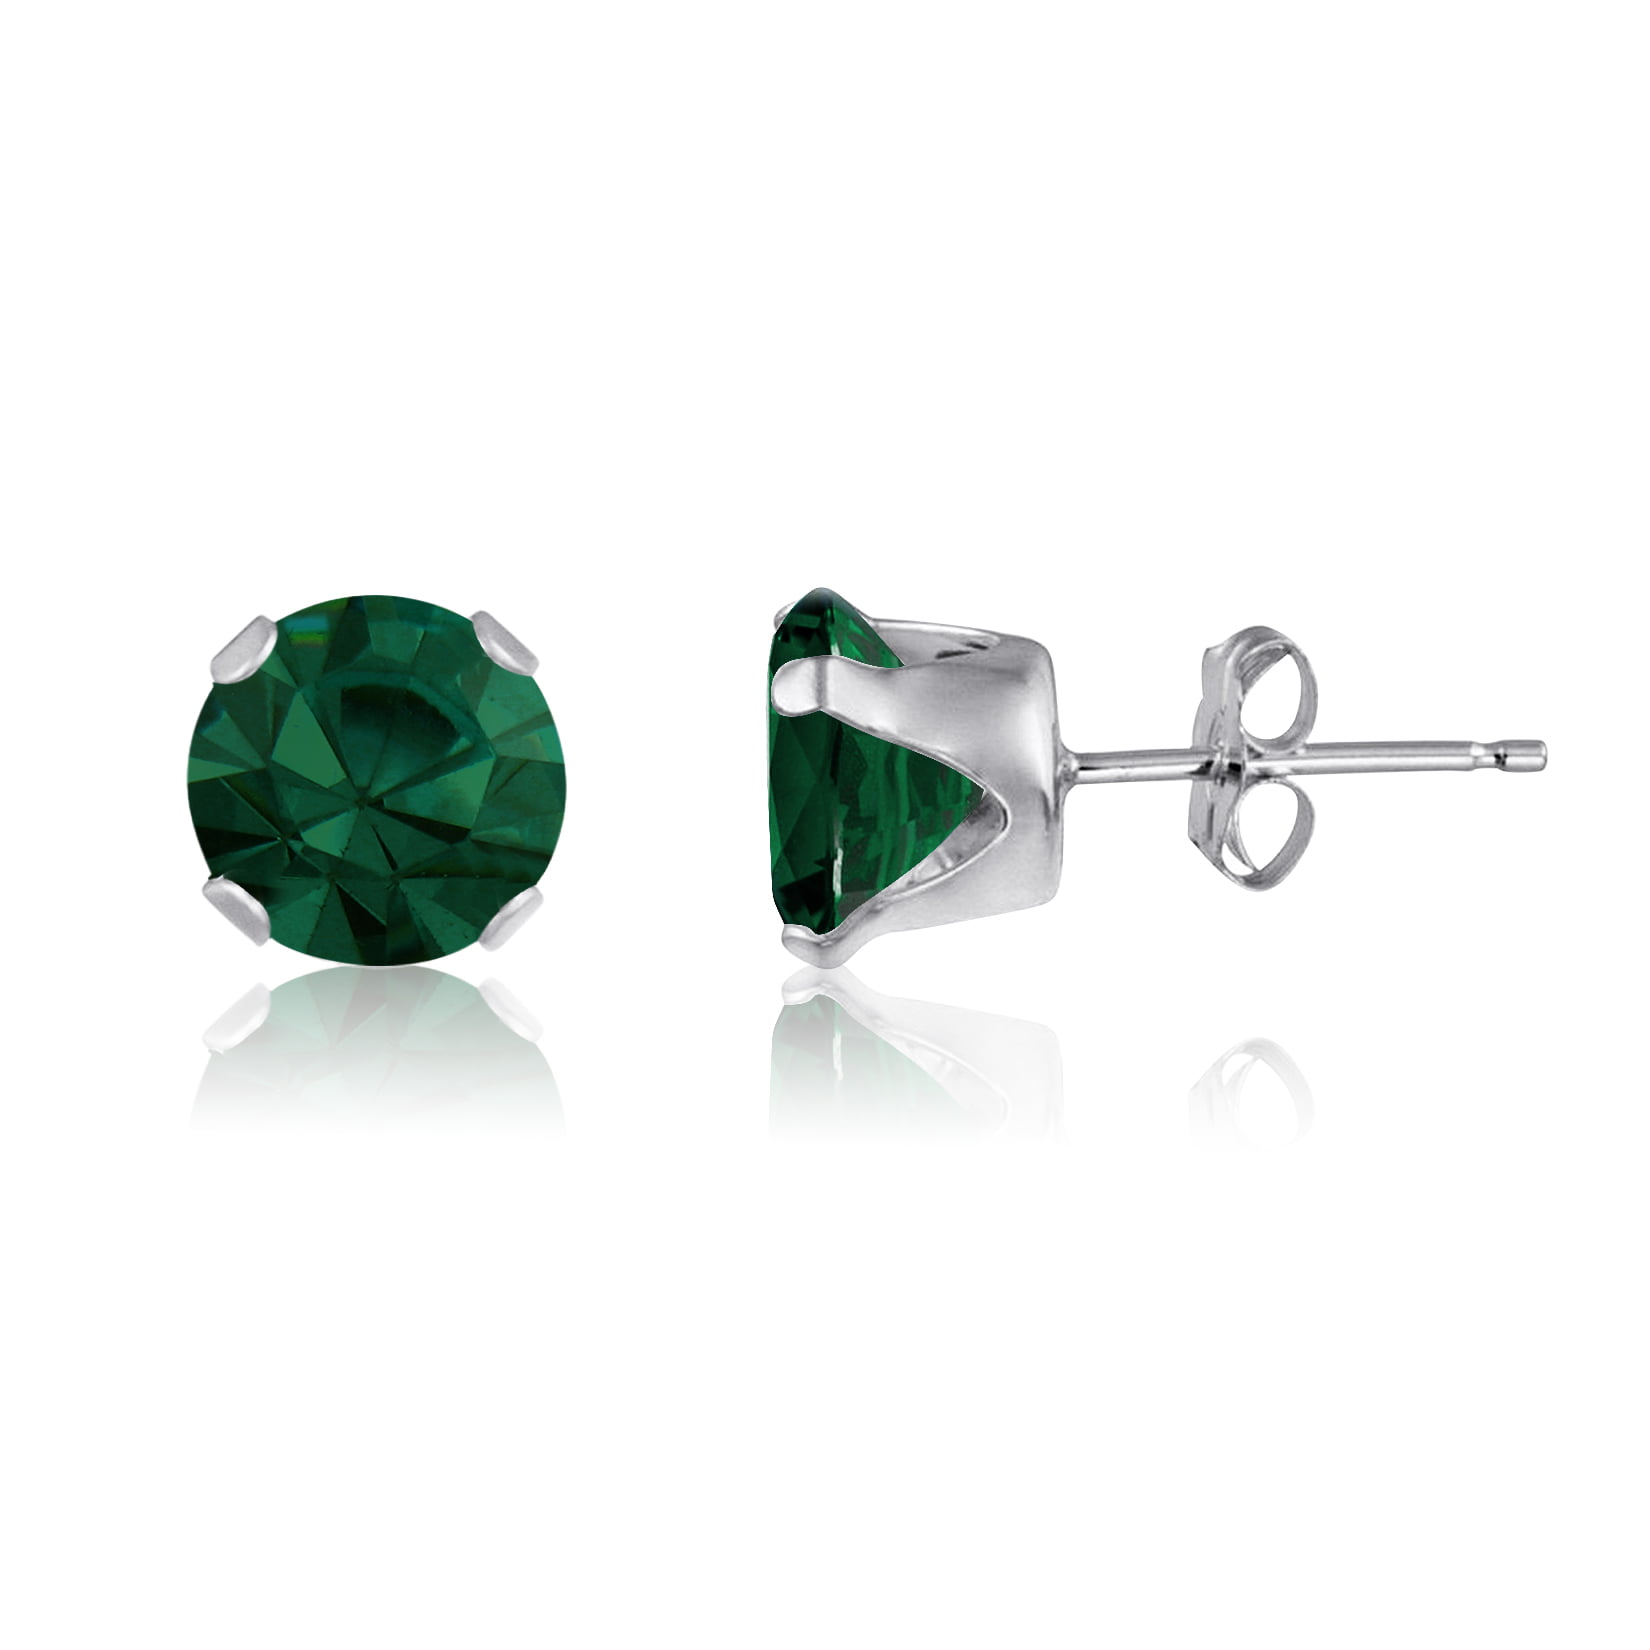 Details about   Light Green Sapphire gemstone stud earrings in sterling silver